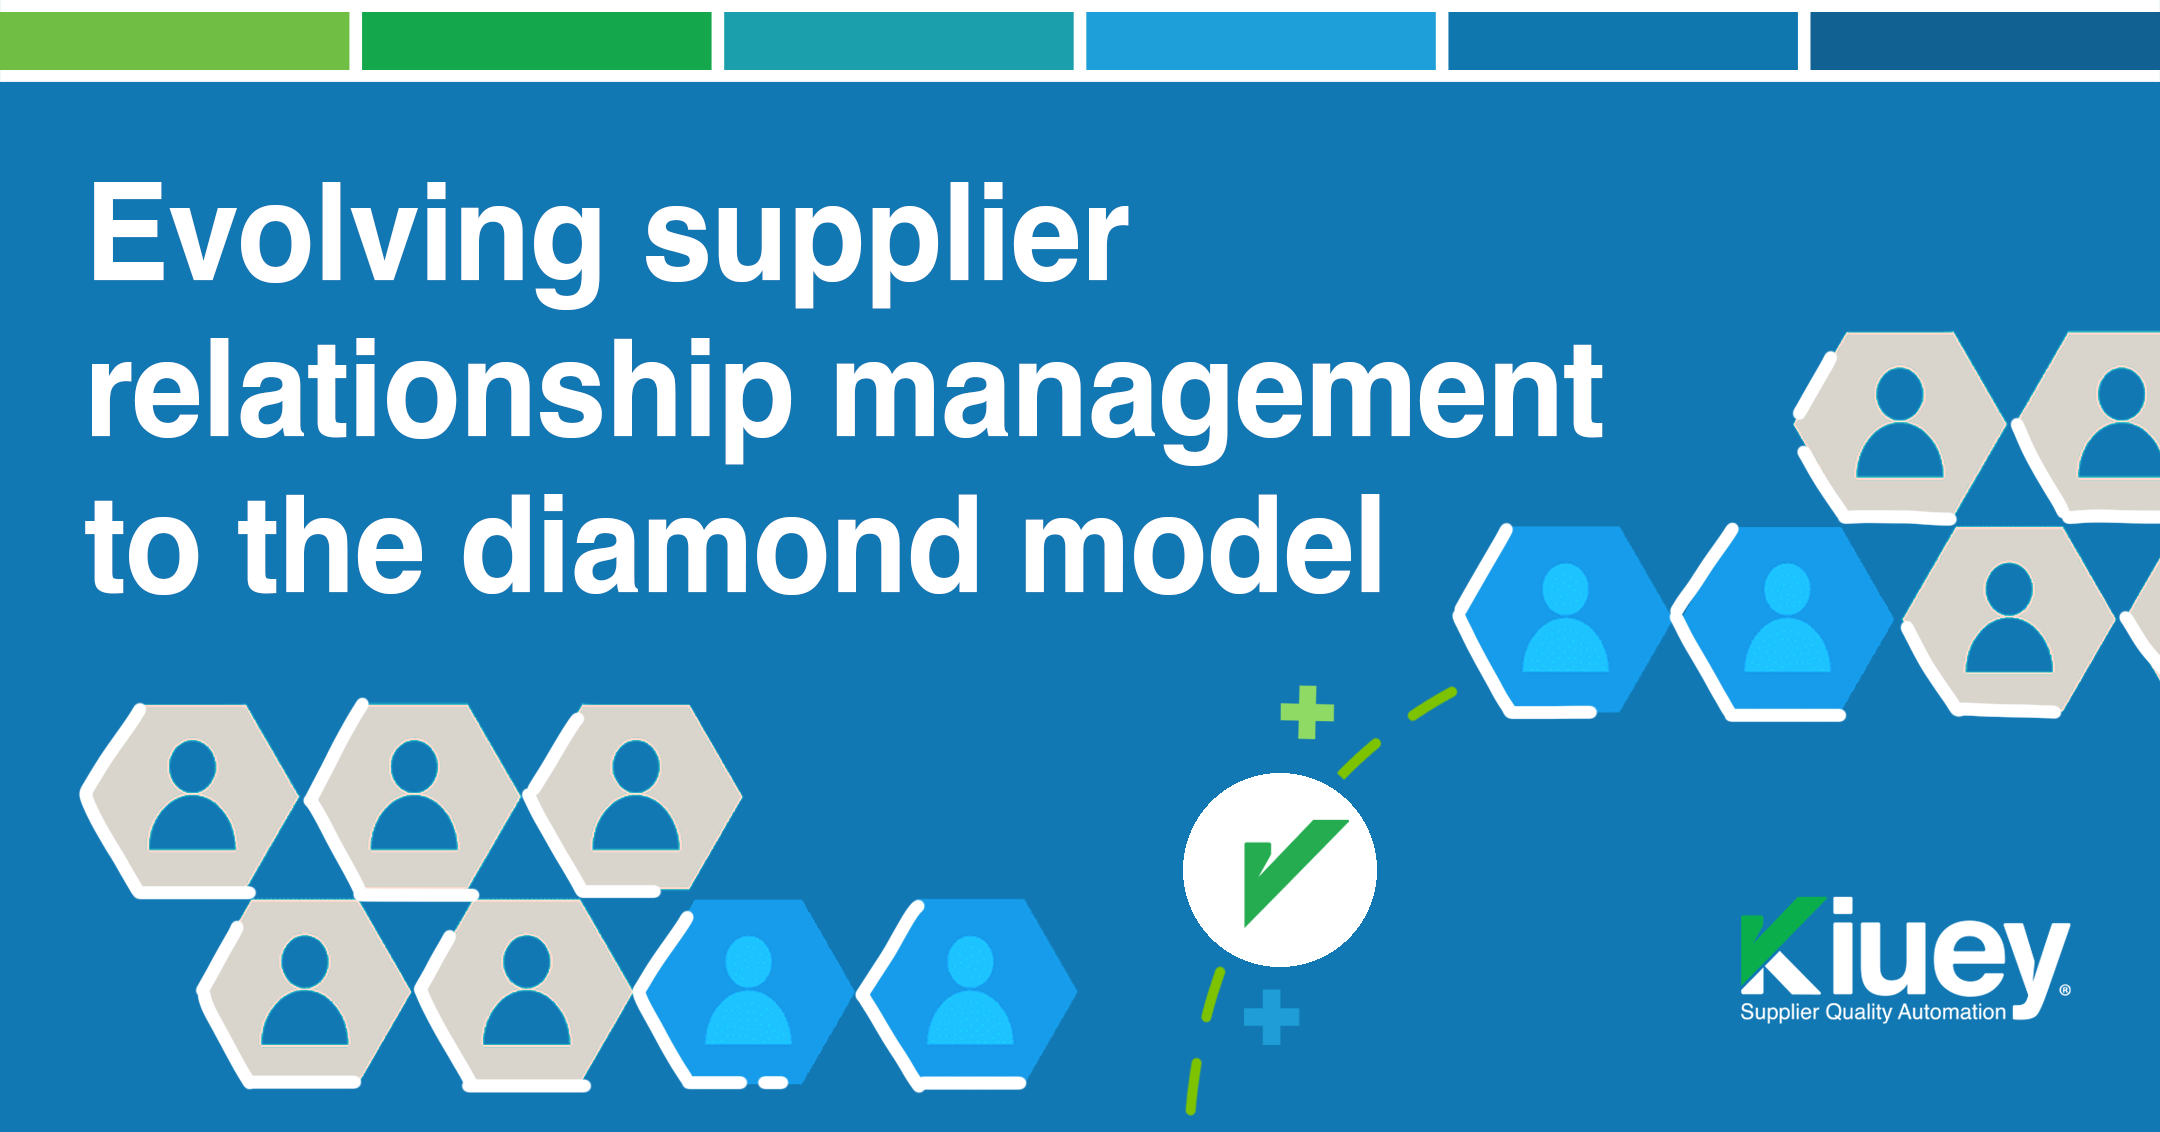 Evolving supplier relationship management to the diamond model